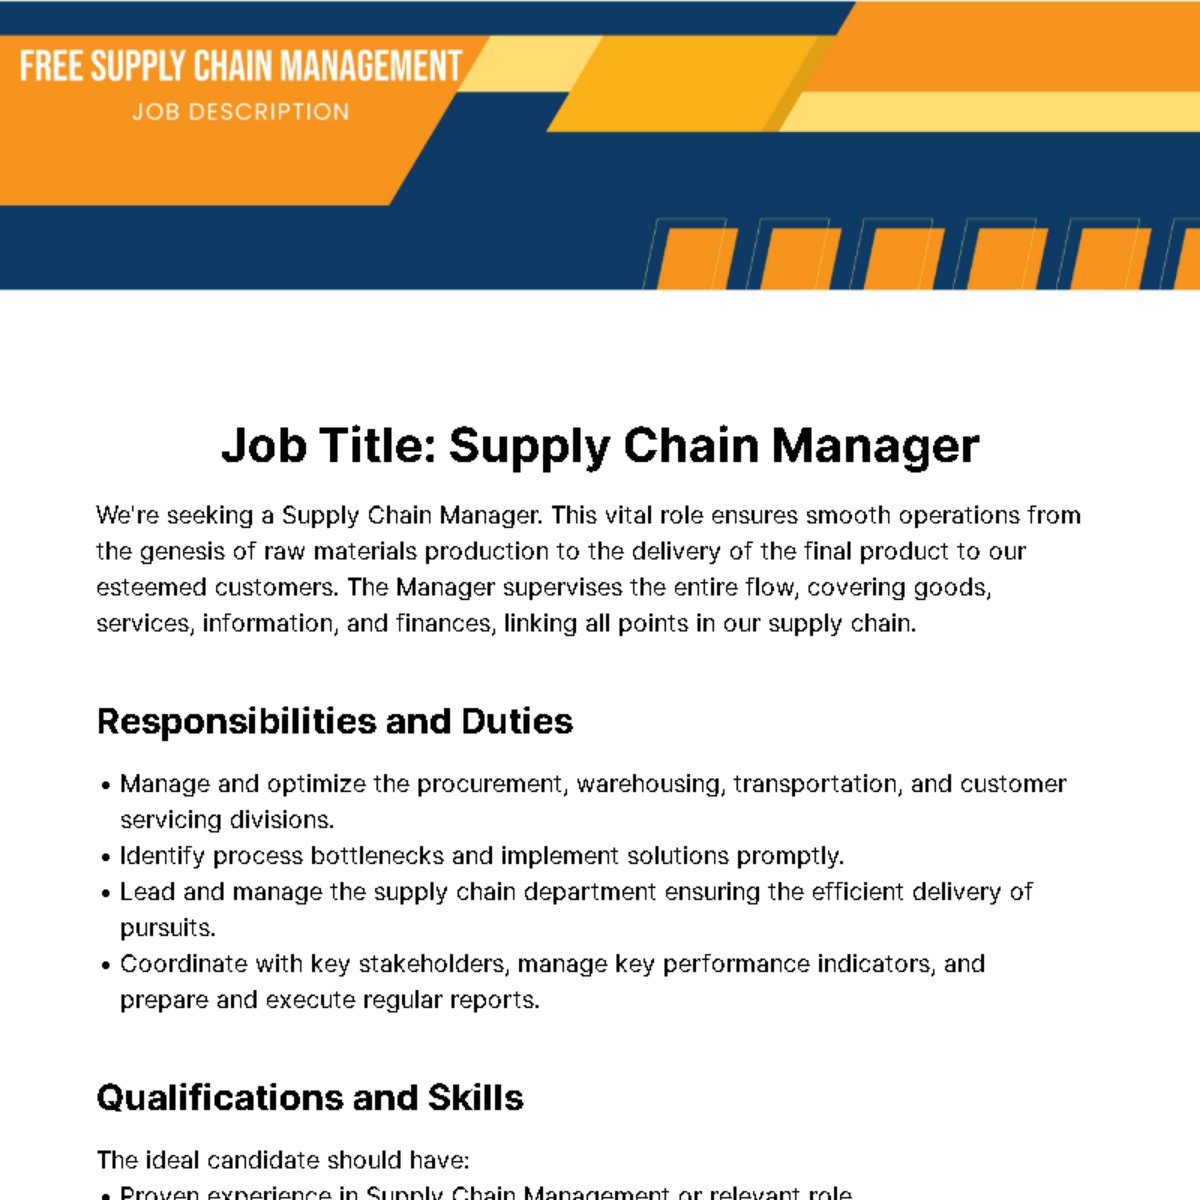 Free Supply Chain Management Job Description Template